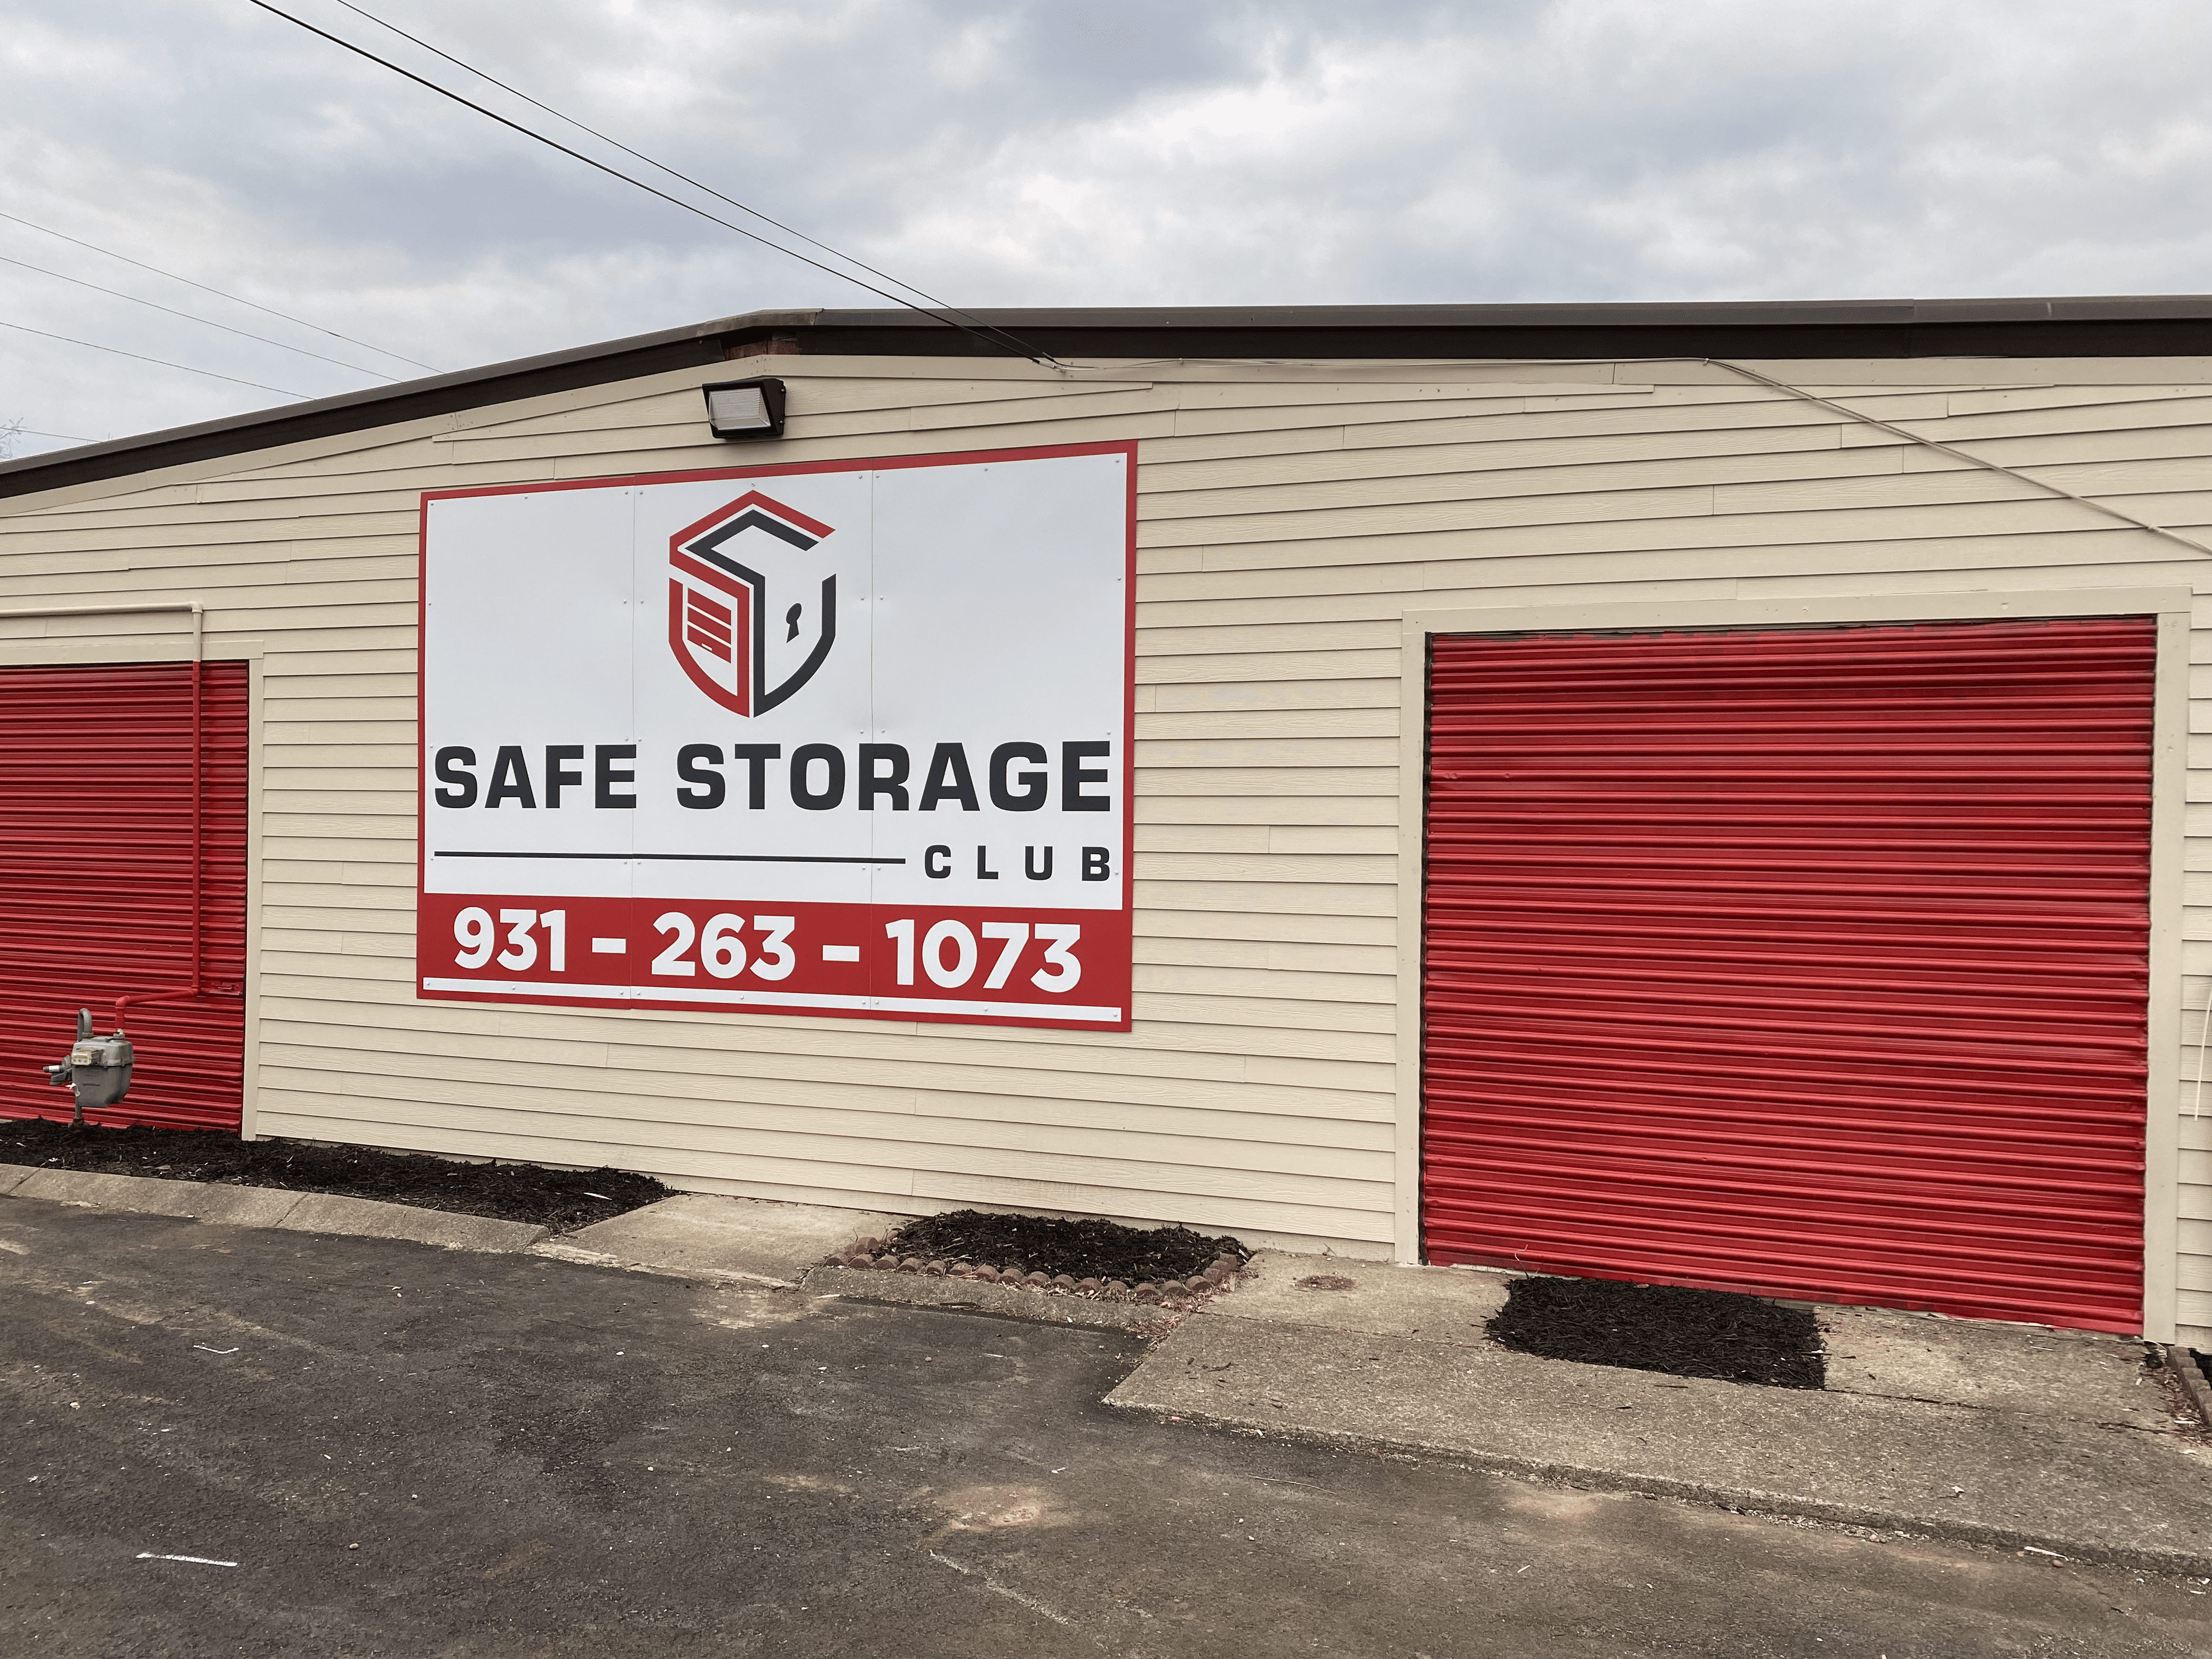 Safe Storage Club facility in Clarksville, TN